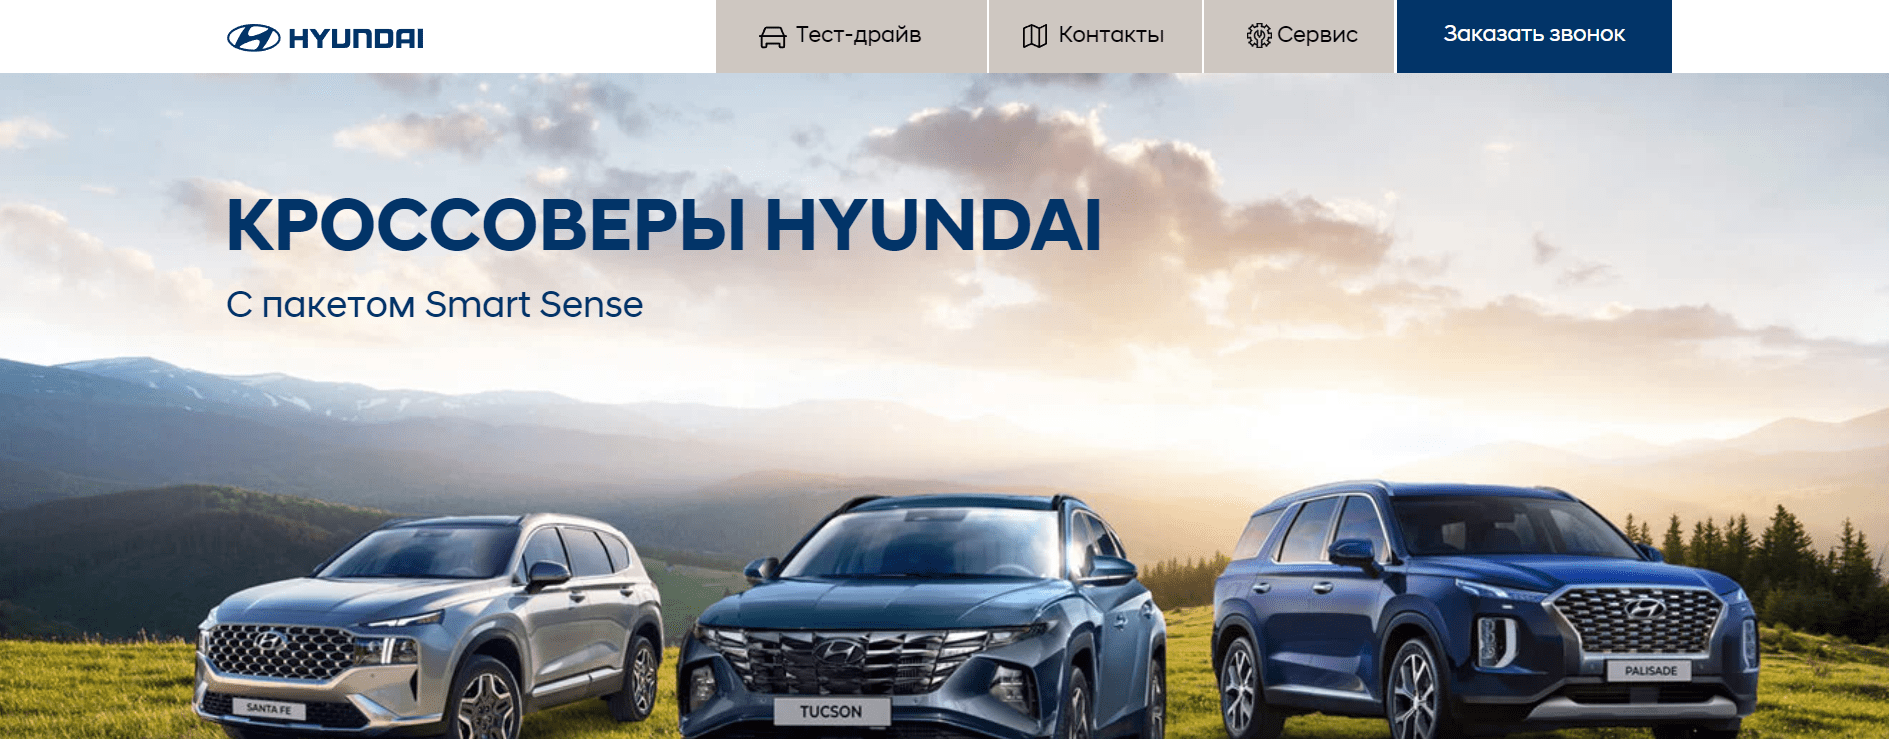 Хёндэ АвтоГрад Hyundai в Минске (hyundai-minsk.by) - официальный сайт